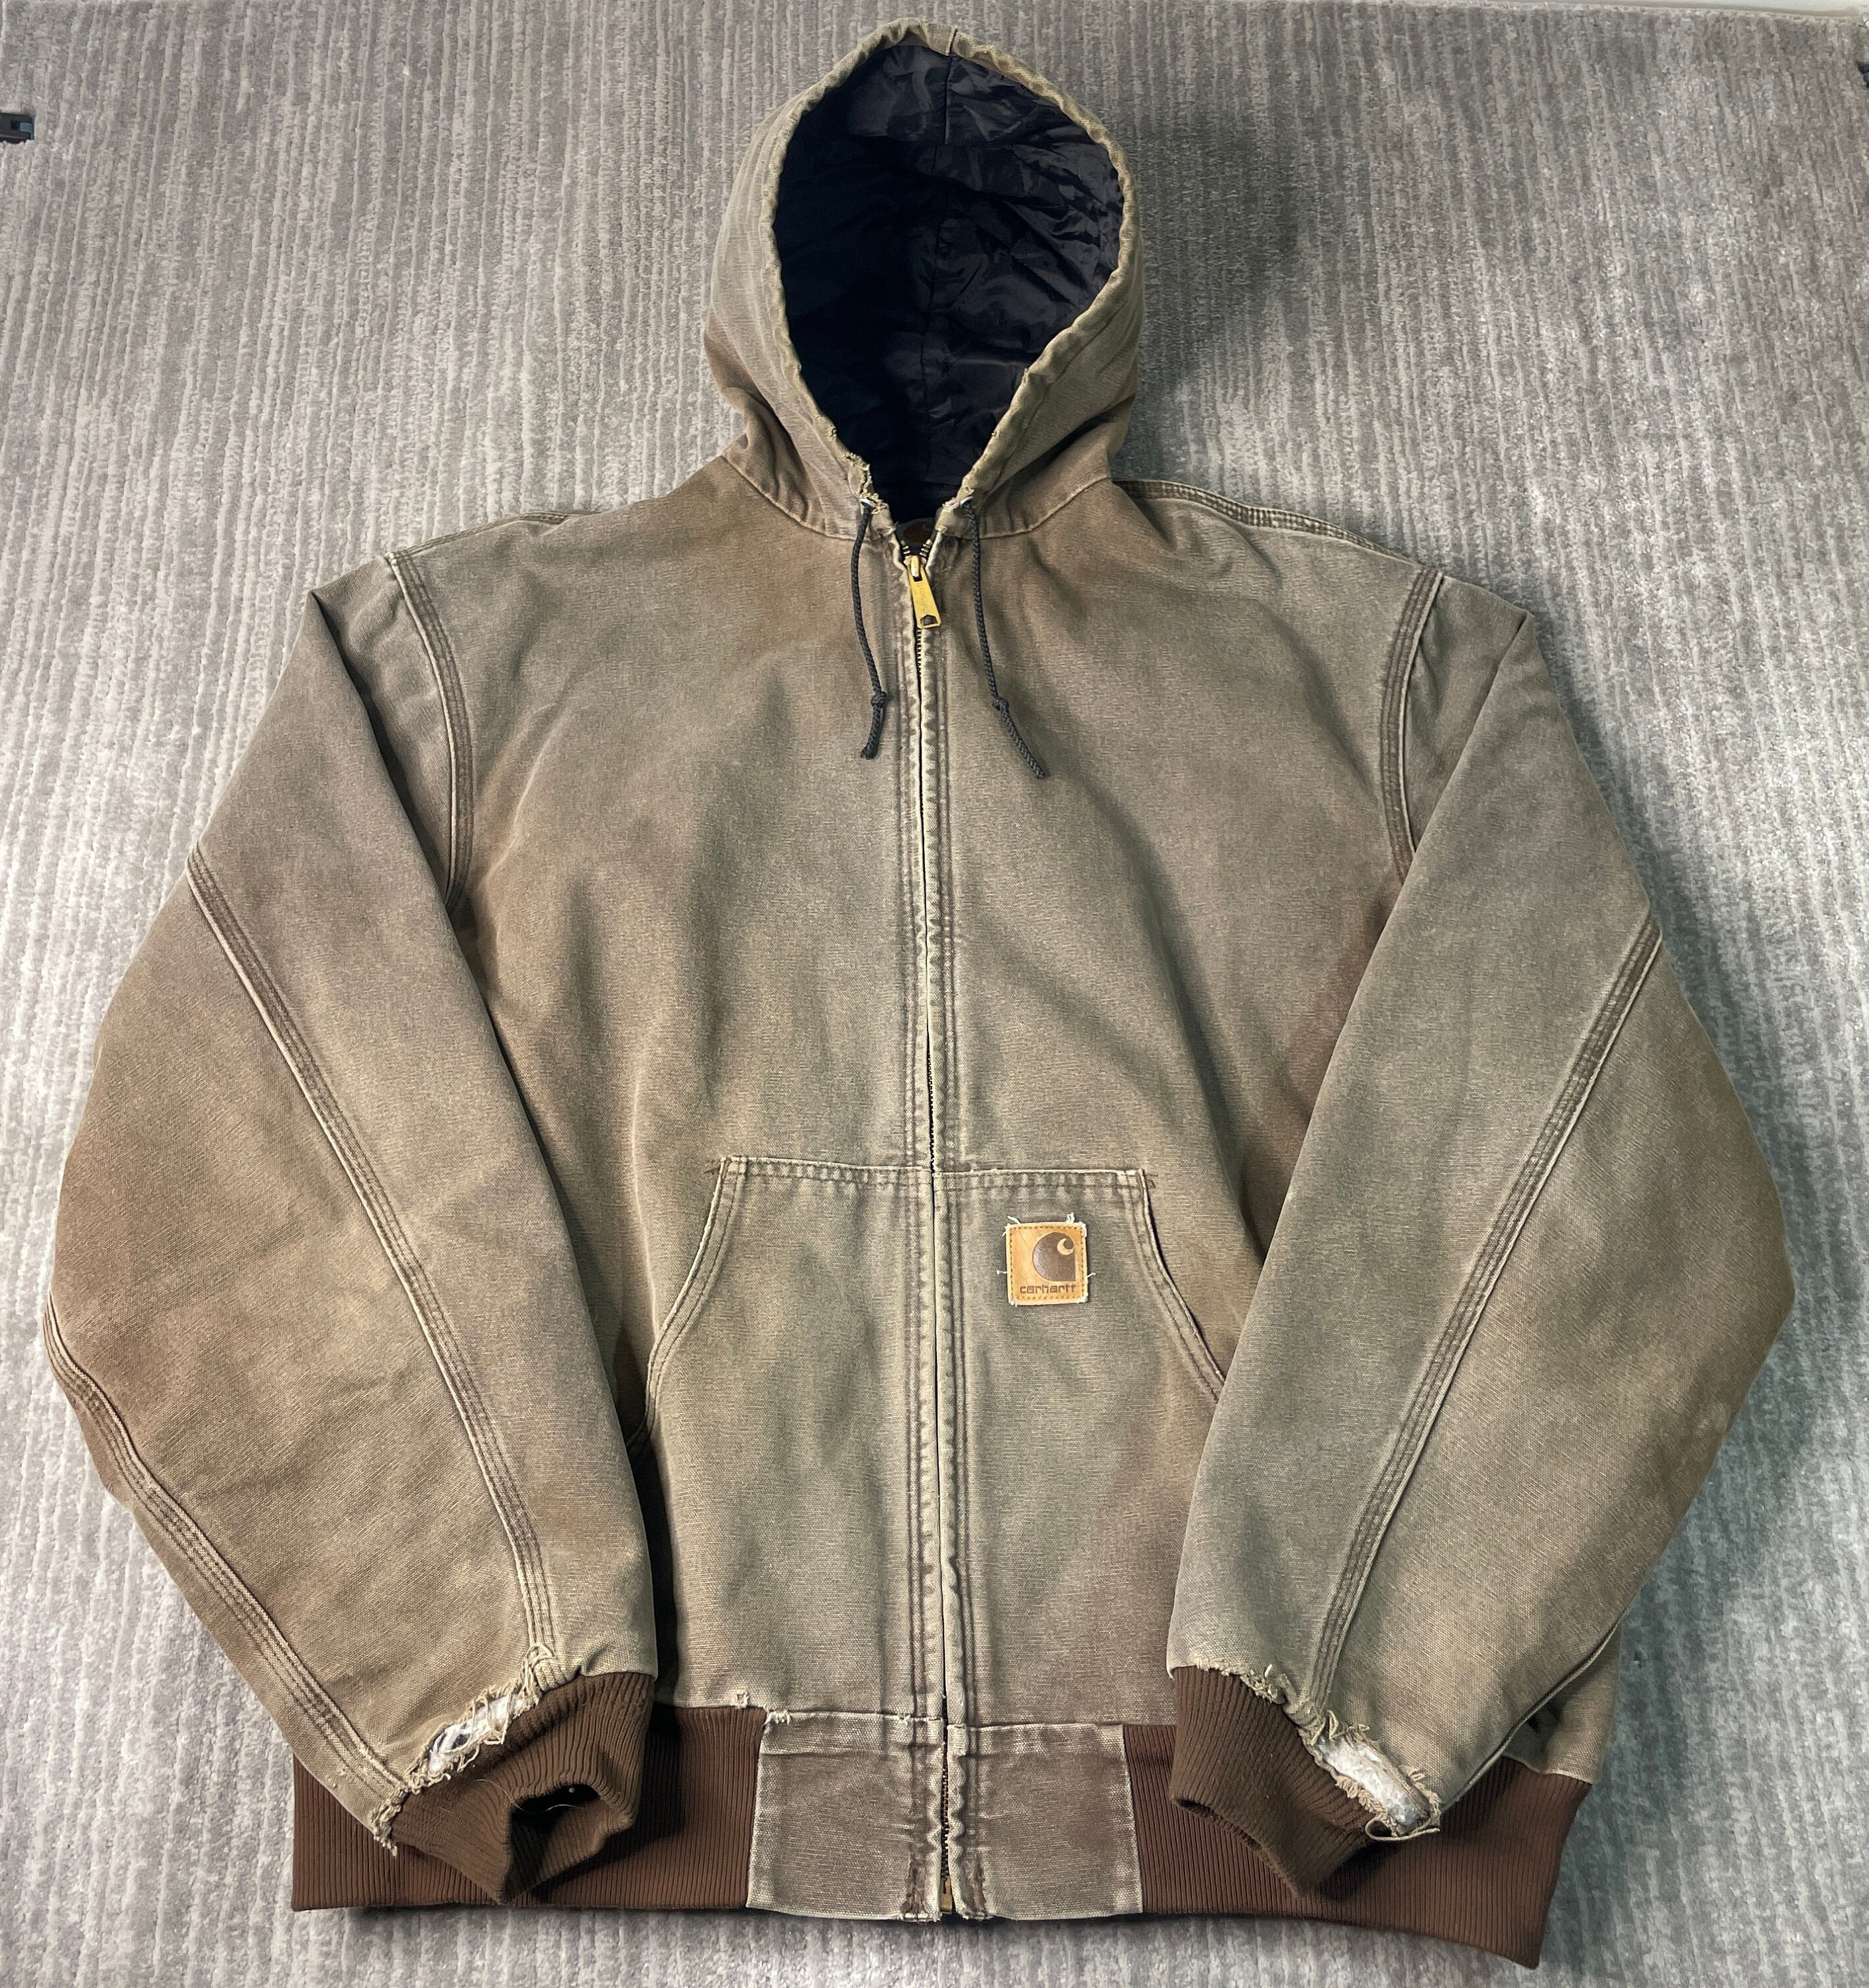 Vintage Carhartt Hooded Jacket Mens Thermal Lined Coat J131 Sz XL